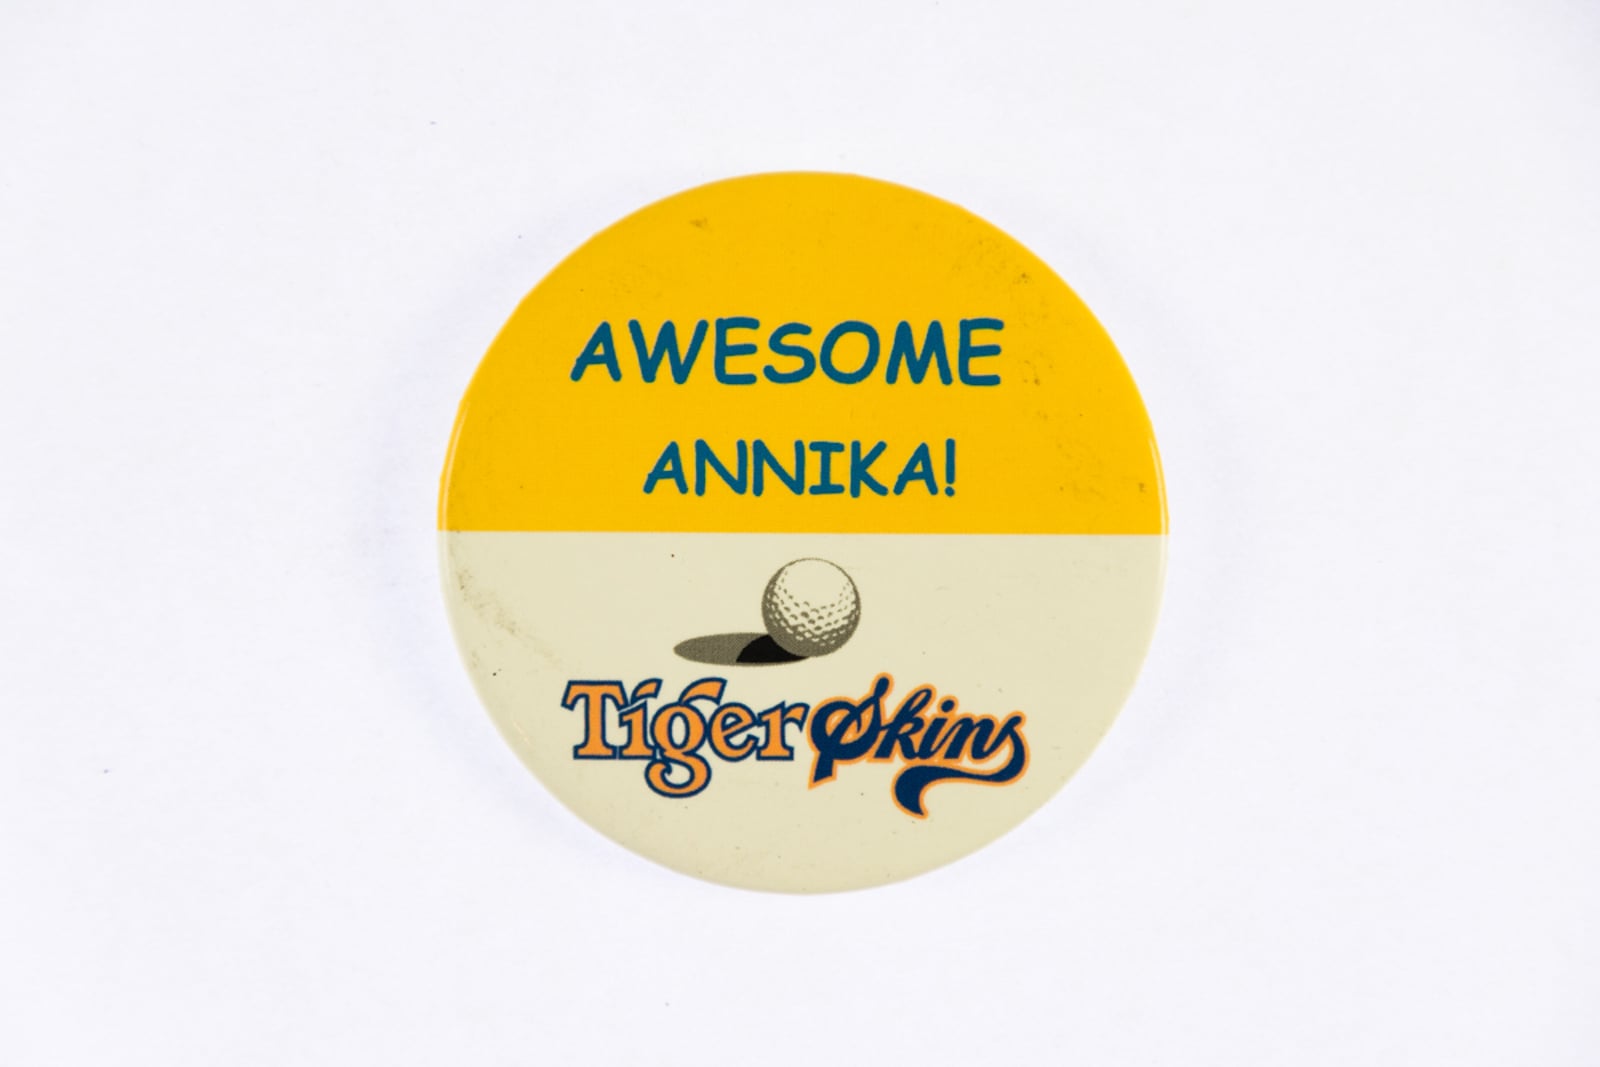 Awesome Annika Yellow Badge